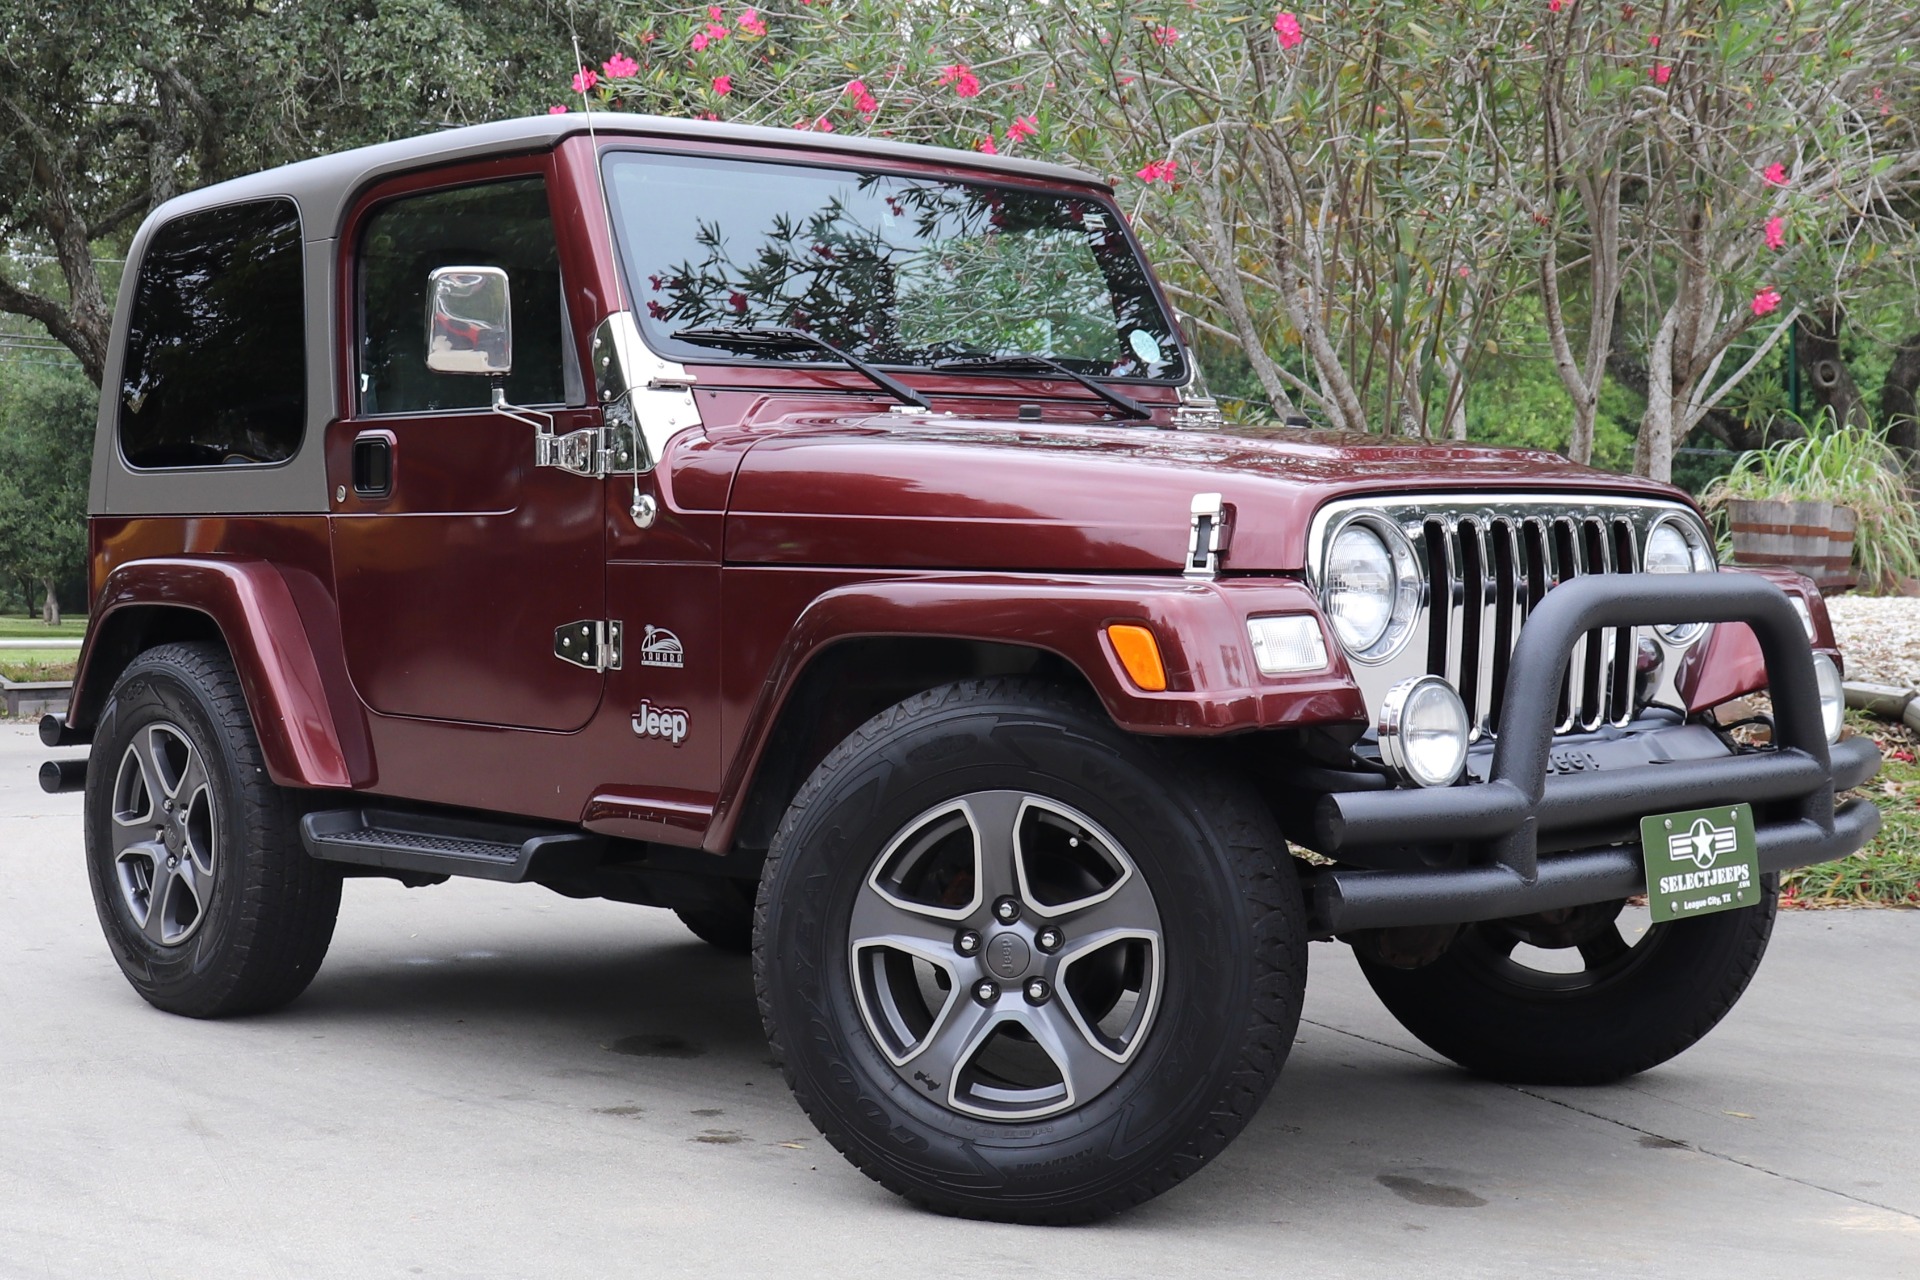 Used 2003 Jeep Wrangler Sahara For Sale ($24,995) | Select Jeeps Inc. Stock  #335827